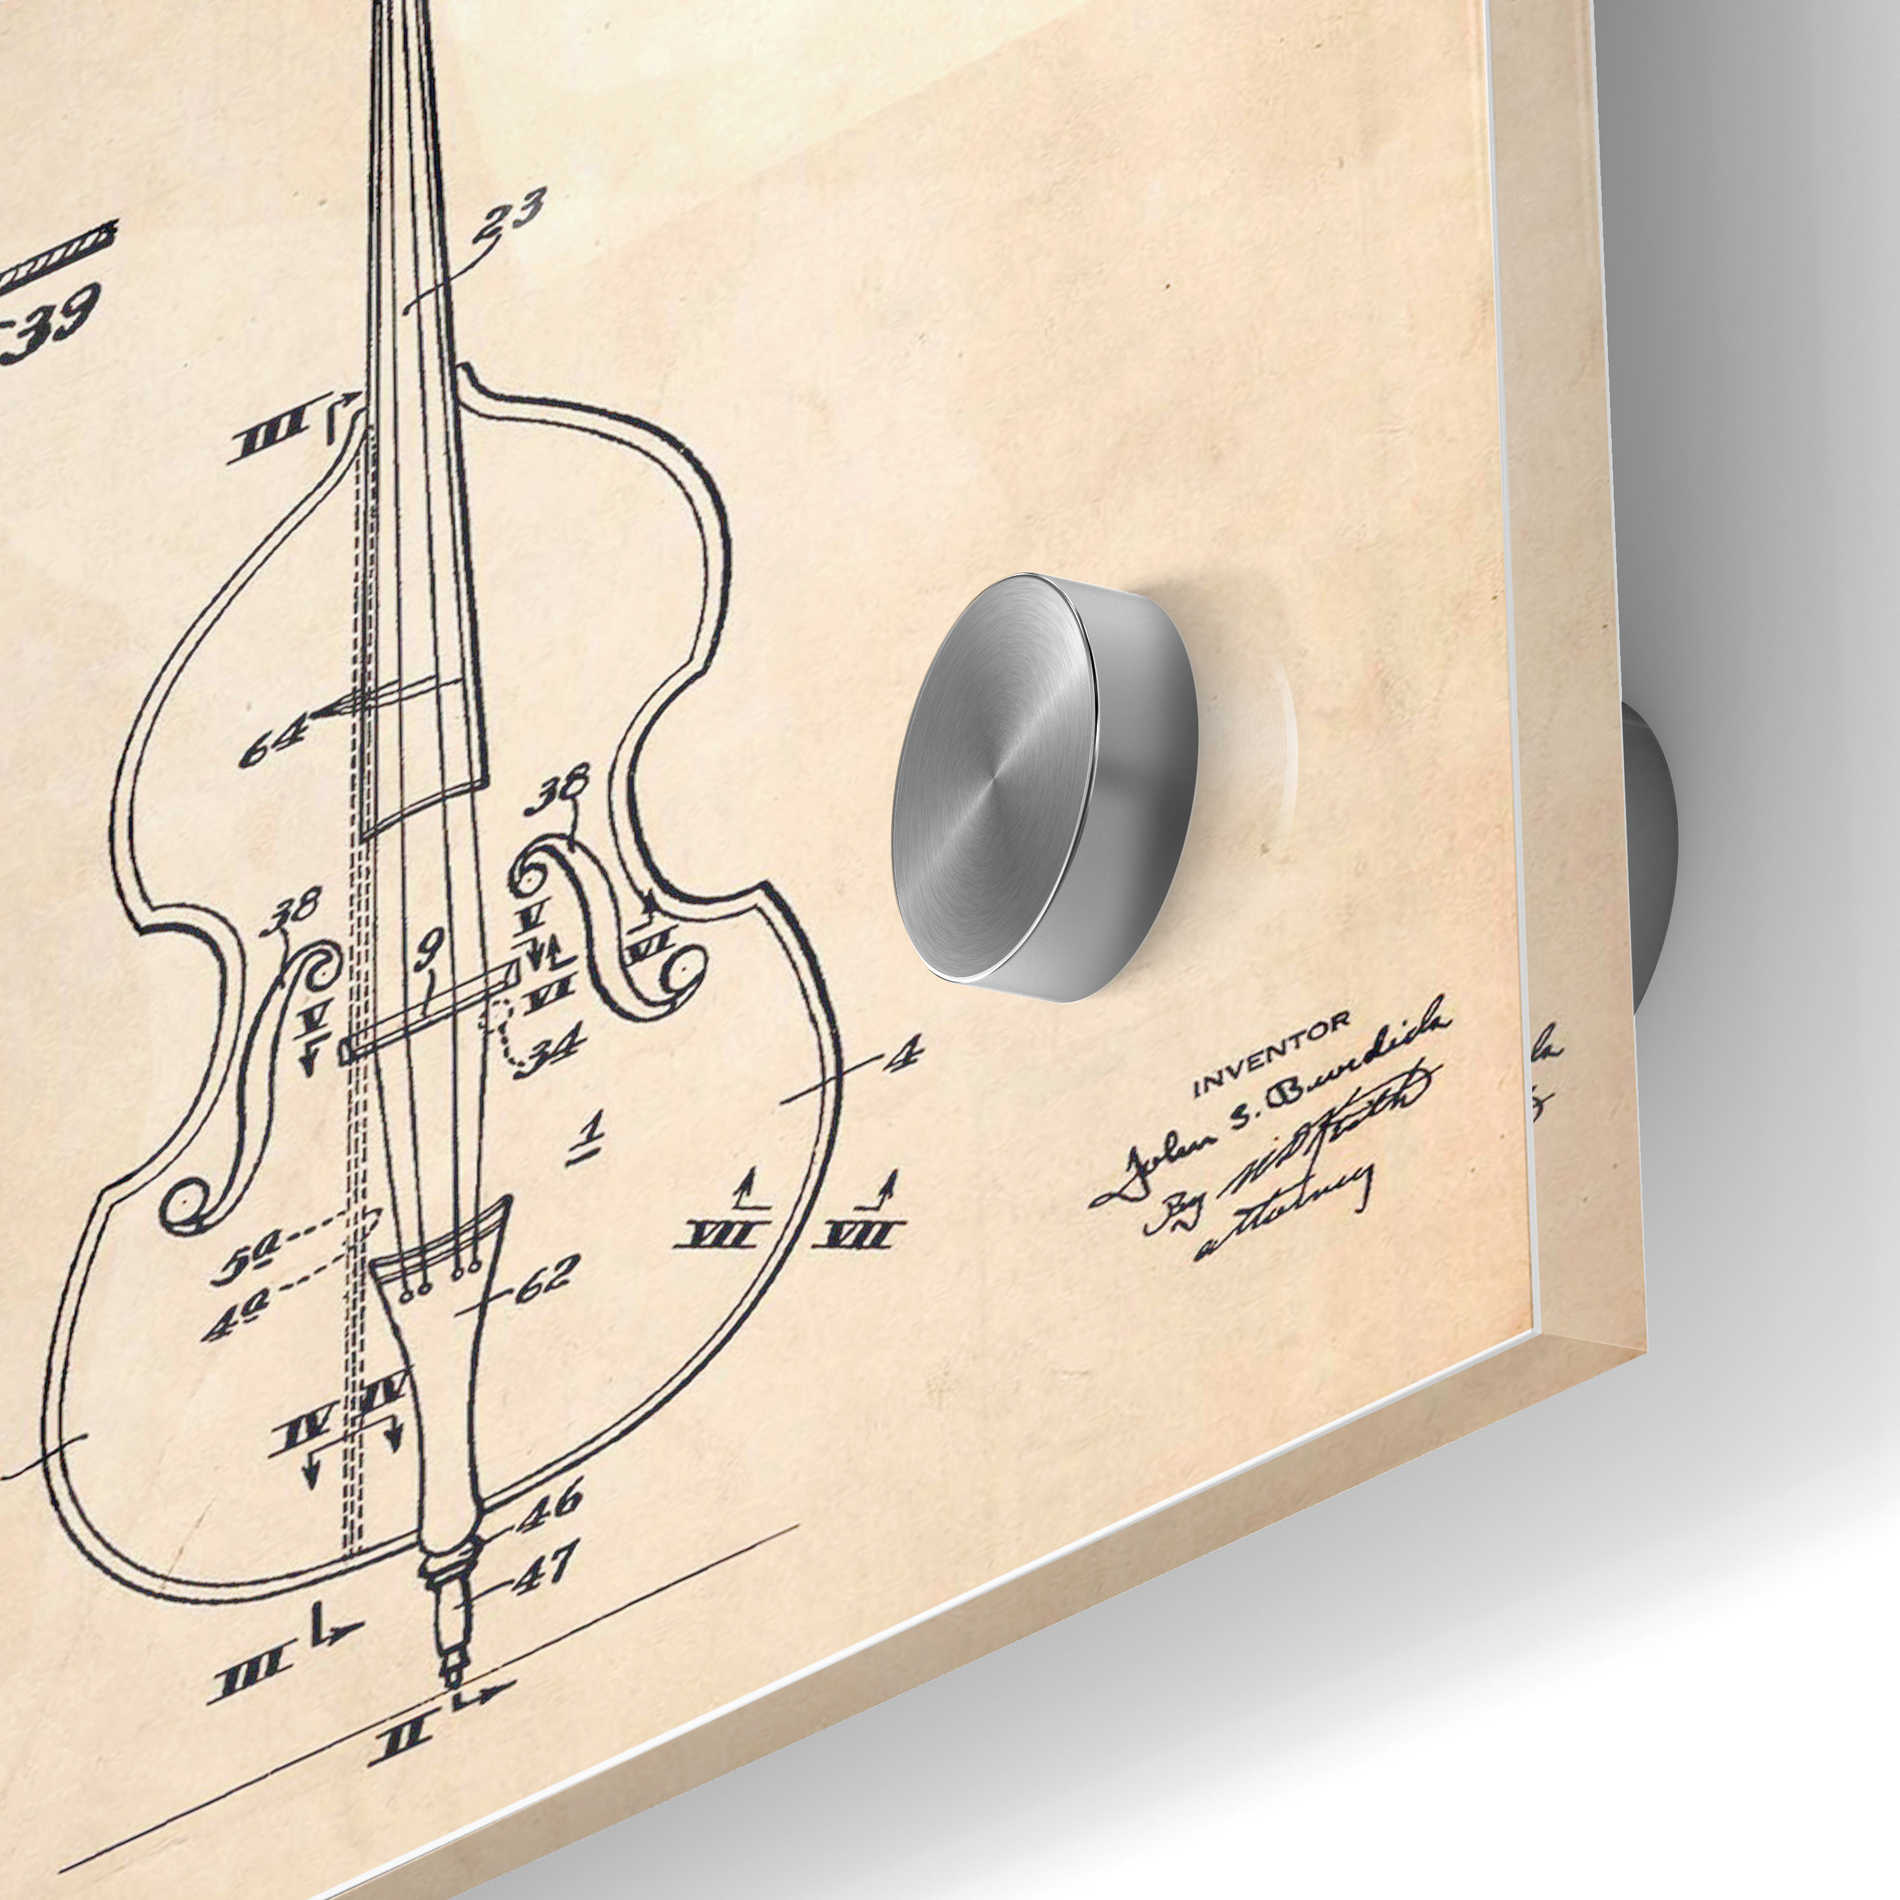 Epic Art 'Violin Blueprint Patent Parchment' Acrylic Glass Wall Art,24x36